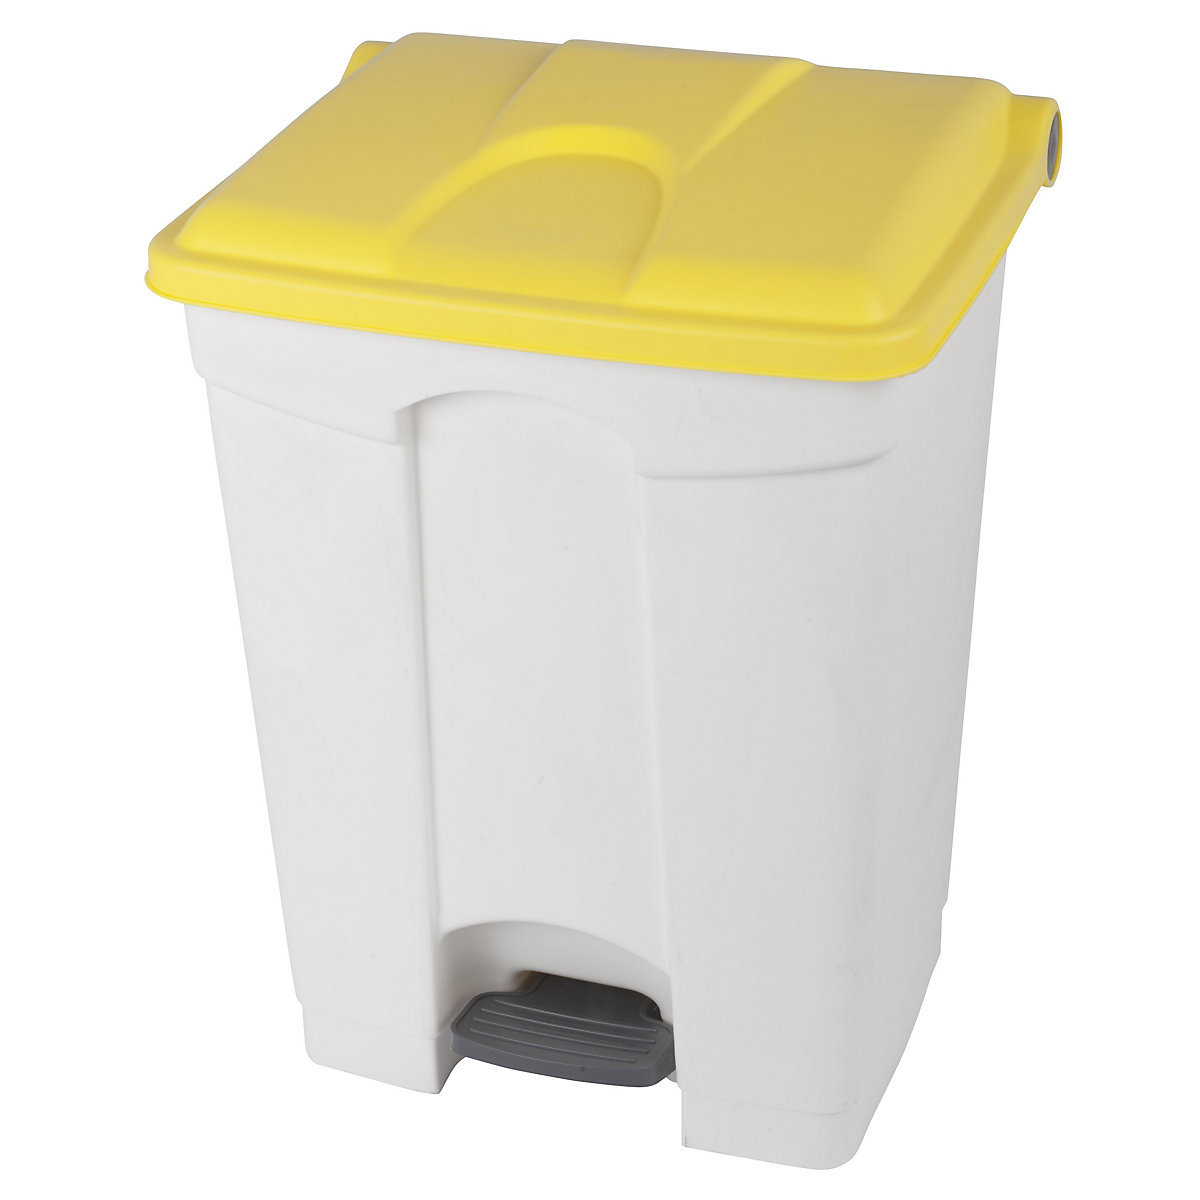 EUROKRAFTbasic – Pedal waste collector, capacity 70 l, WxHxD 505 x 675 x 415 mm, white, yellow lid